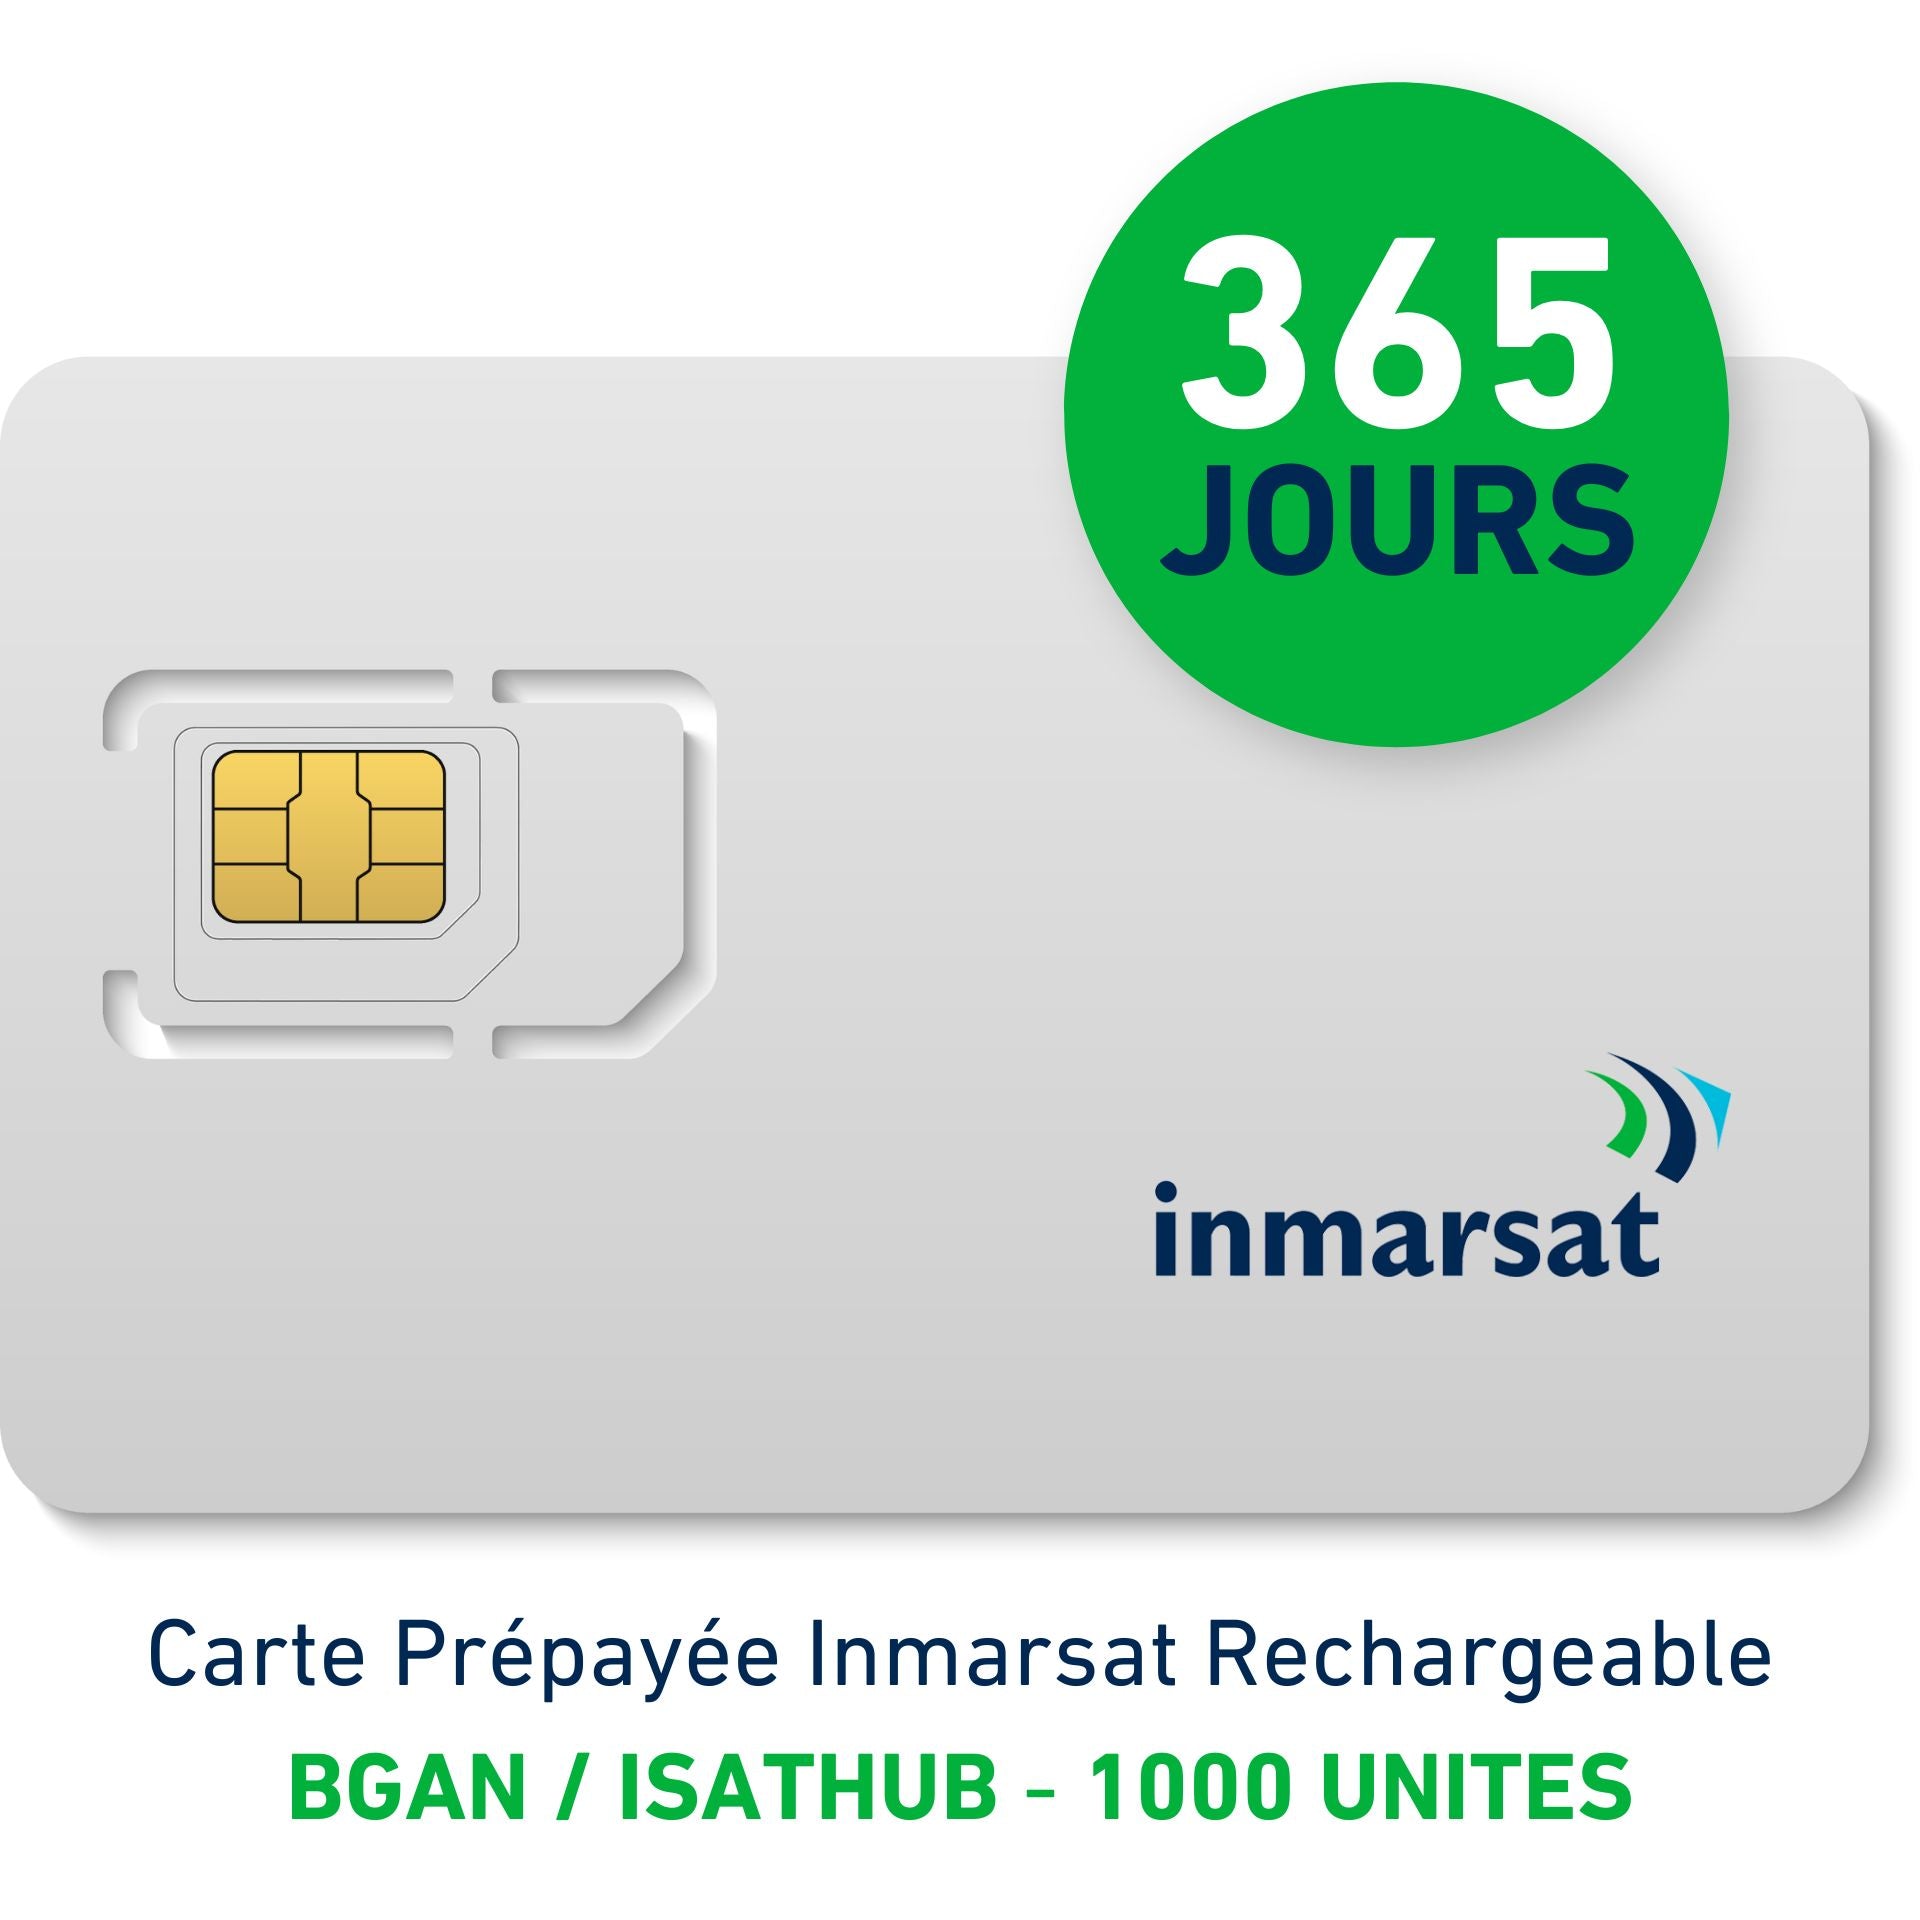 INMARSAT Prepaid-Karte, wiederaufladbar BGAN/IsatHub - 1000 UNITS - 365 TAGE